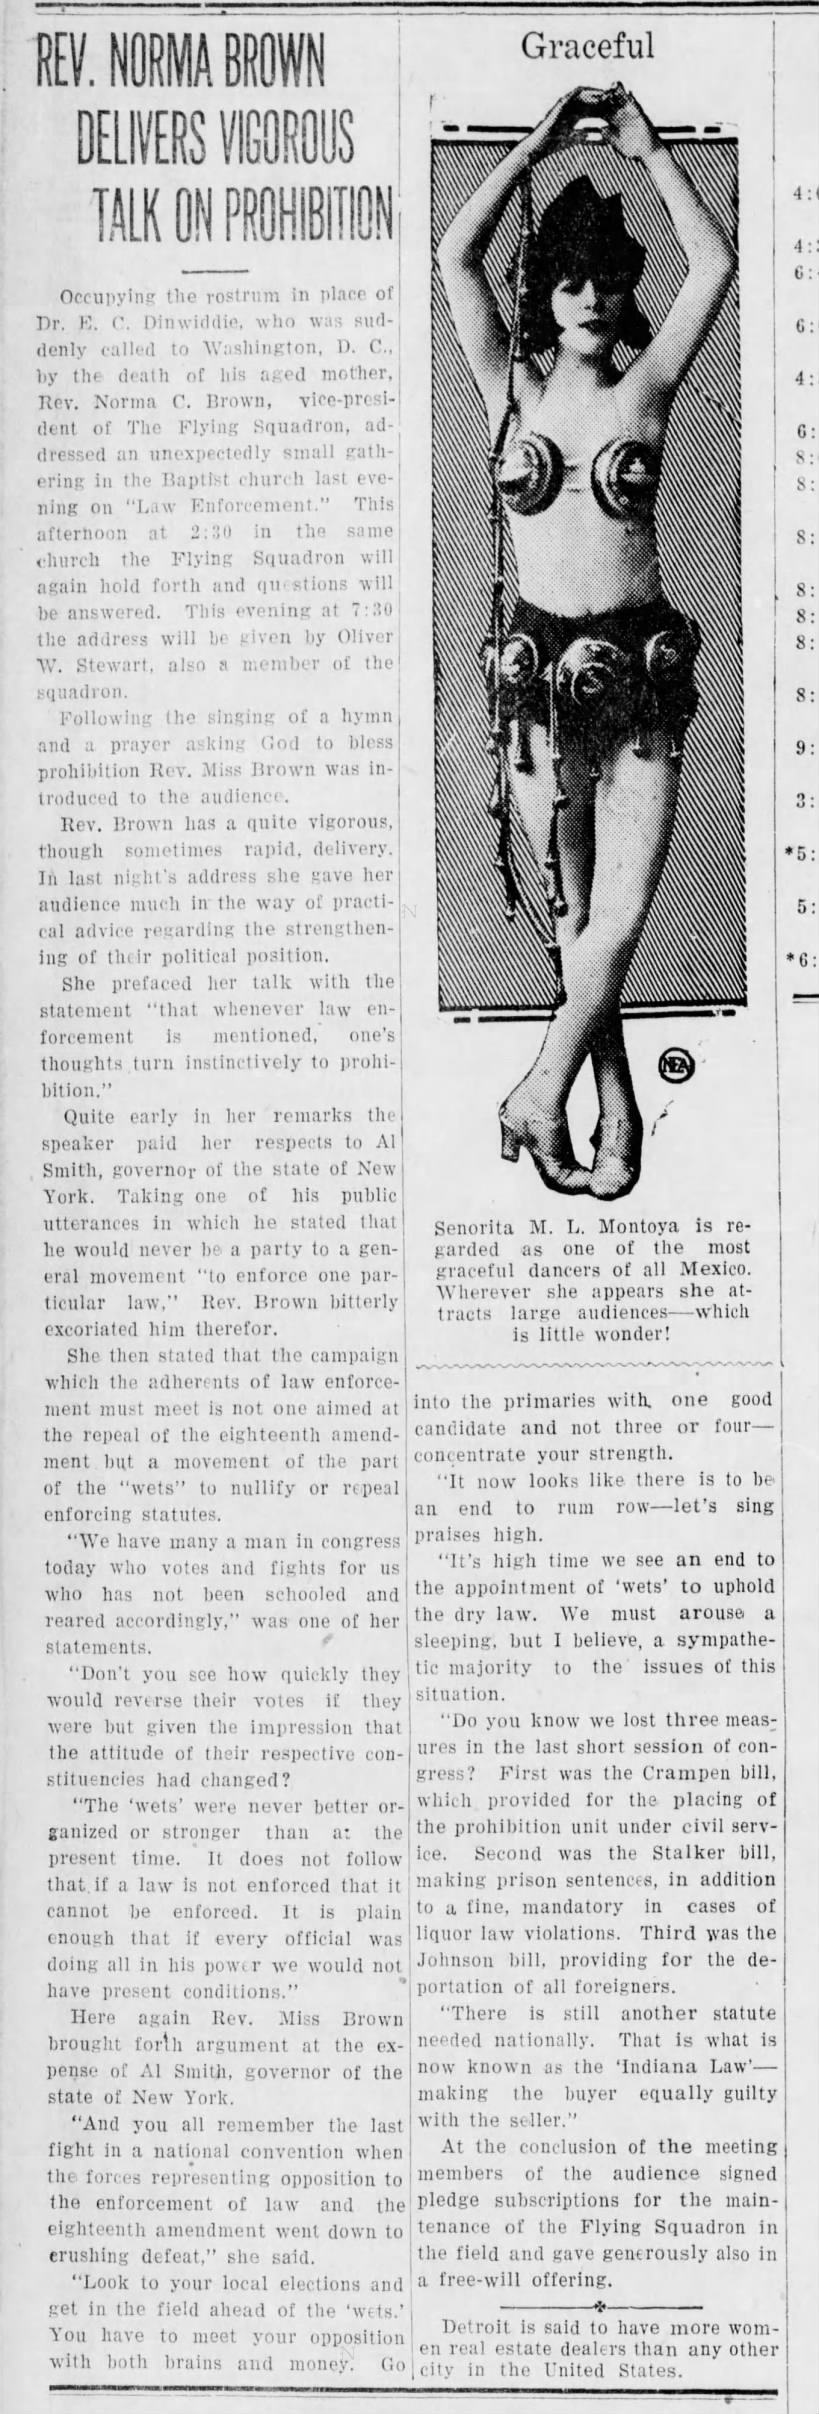 Santa Cruz Evening News, 15 May 1925, Page 10, Column 1